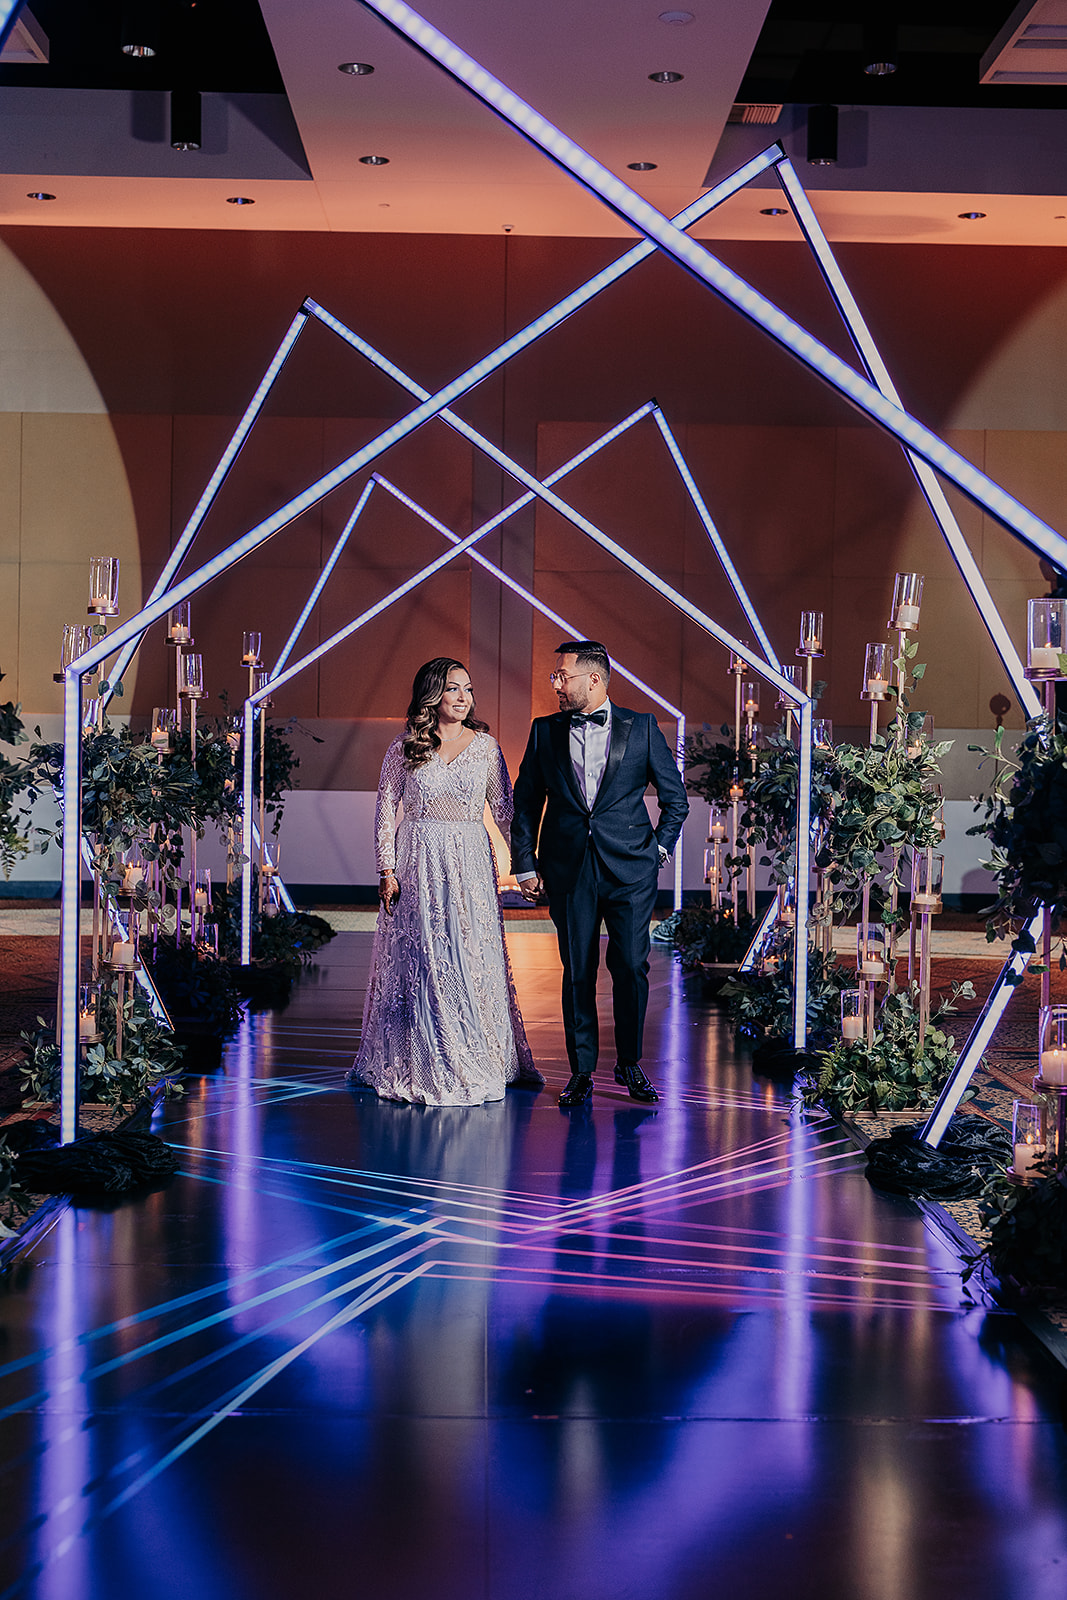 Stafford center wedding reception photos 